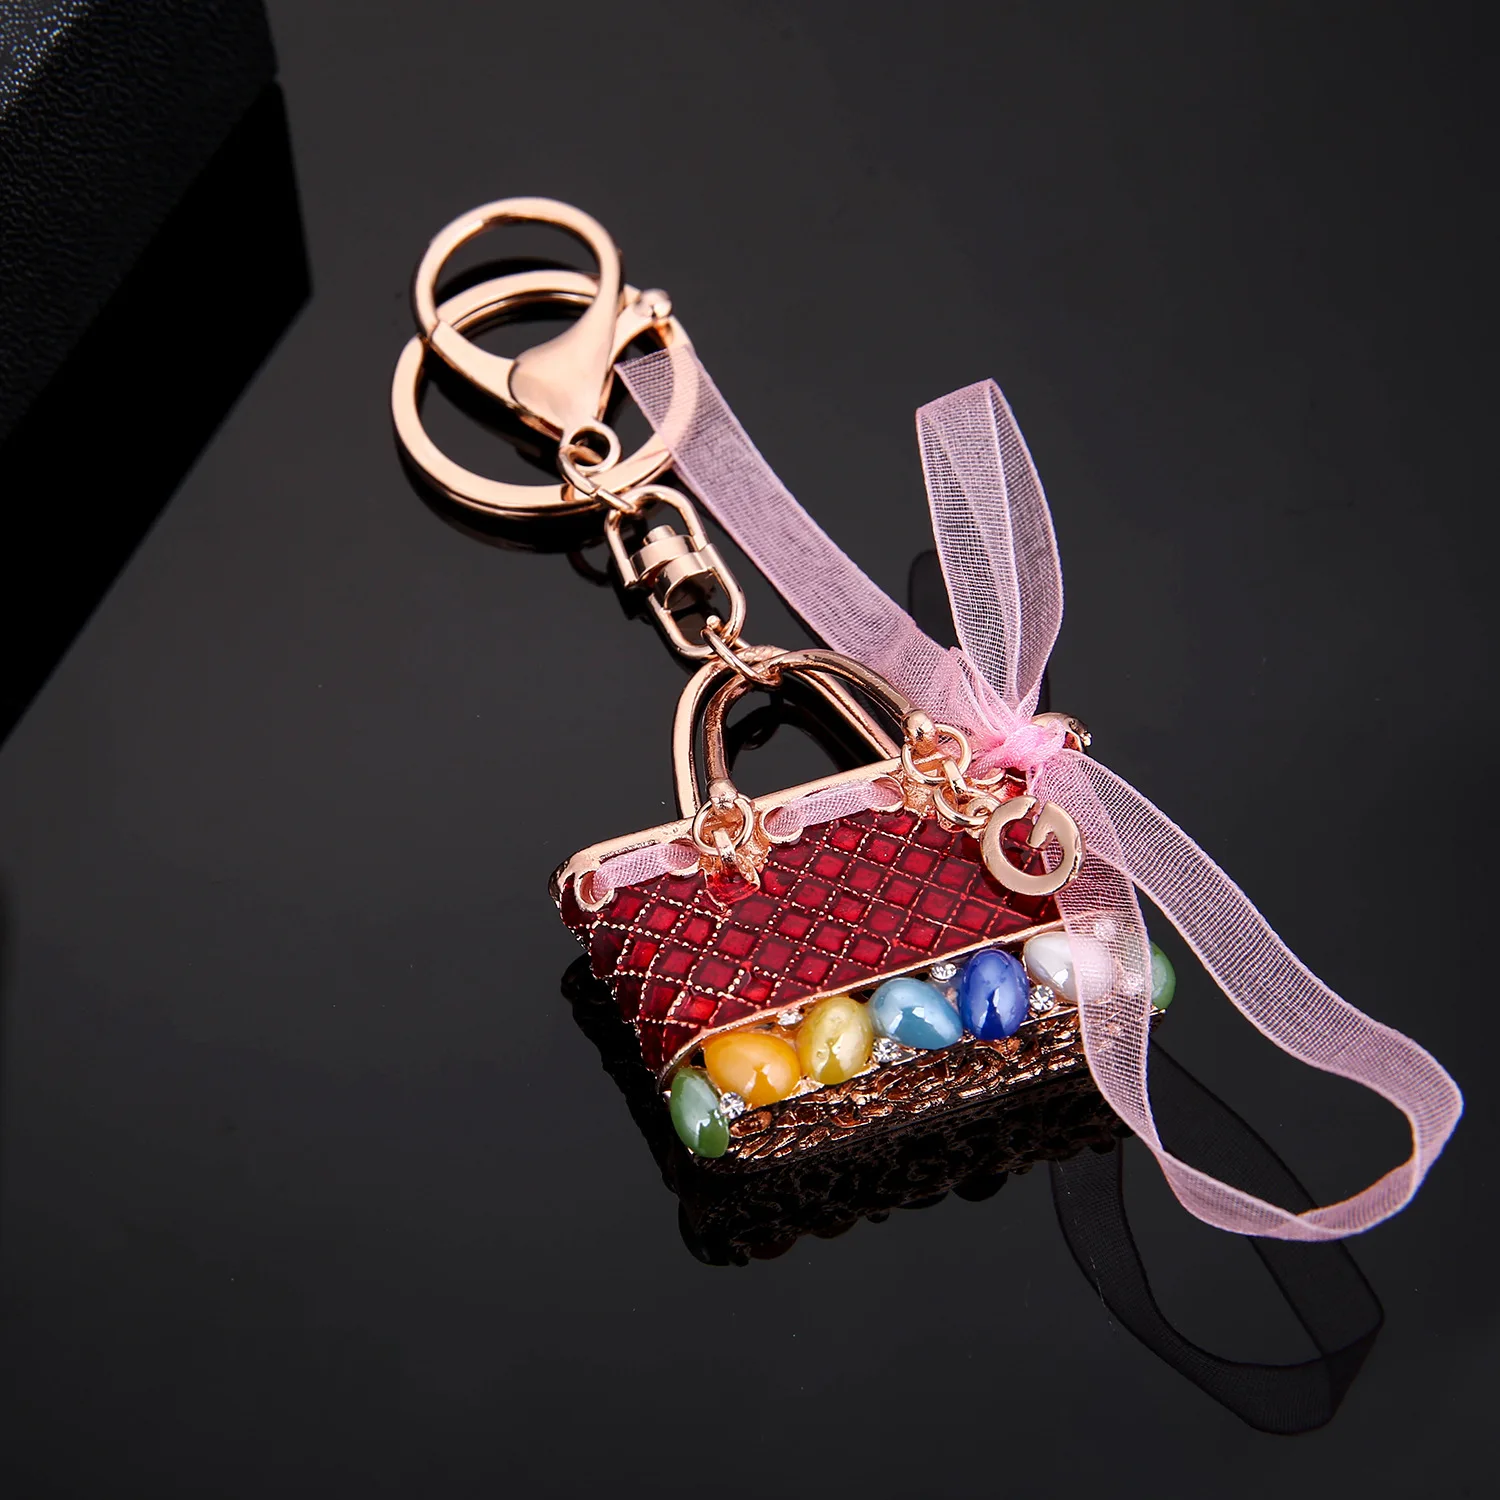 Source New Handbag Keychain Small Lady Bag Ornaments